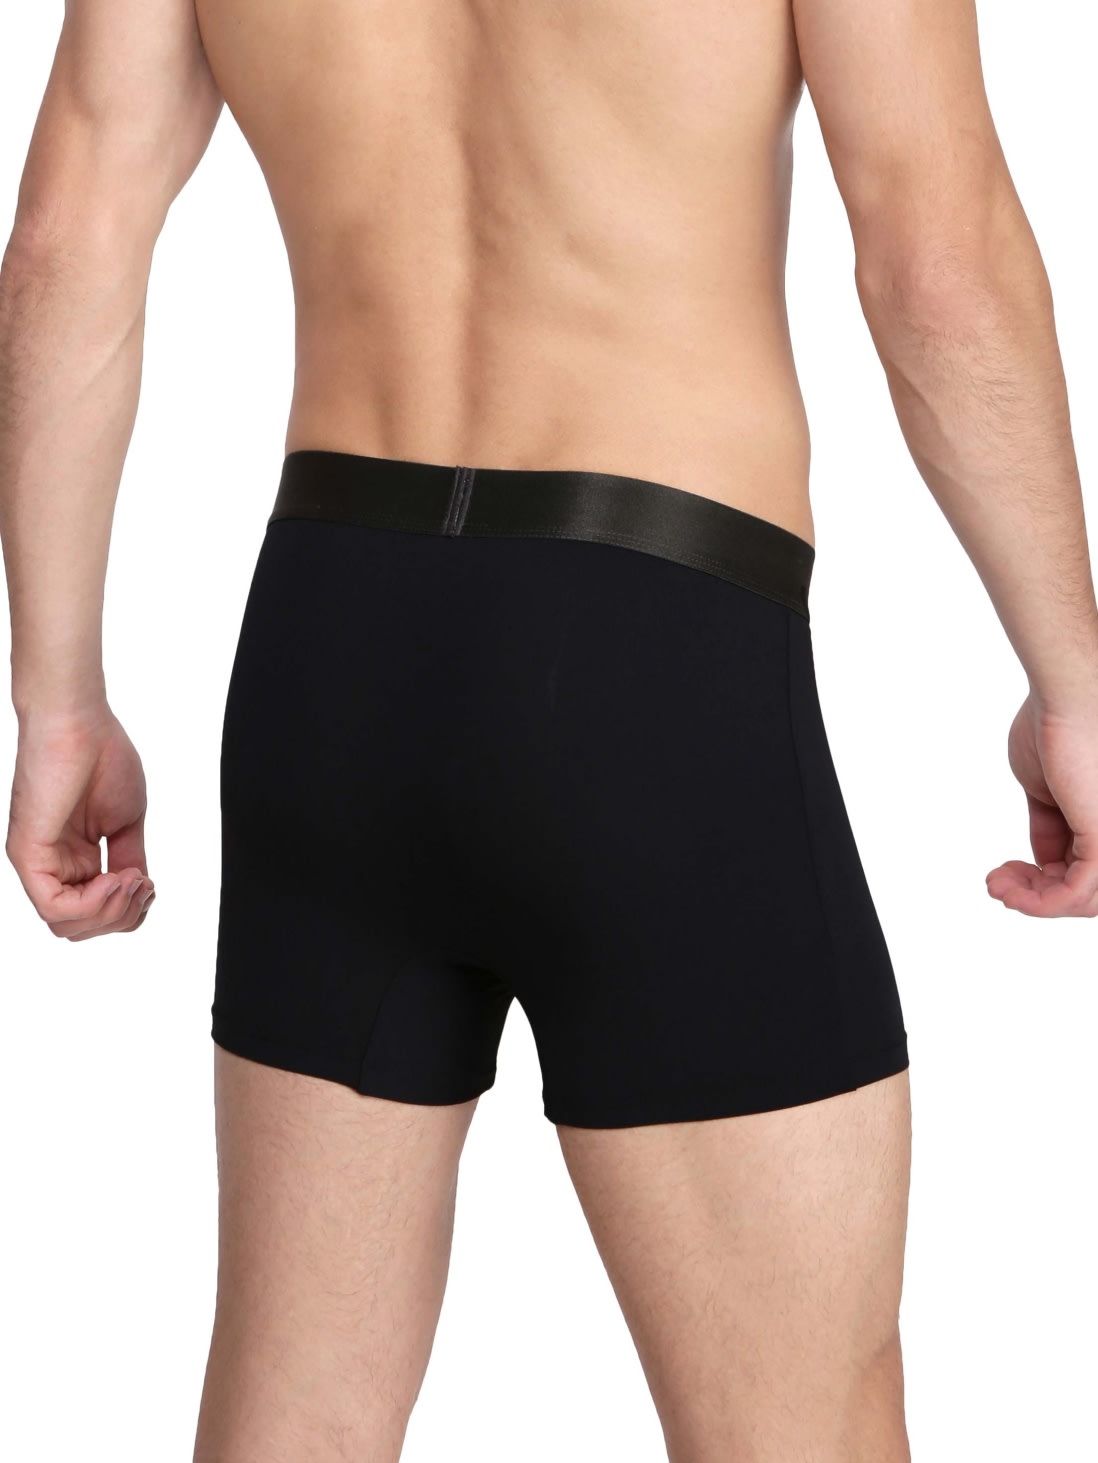 Buy Men Trunks Underwear IC28 Black |Jockey India